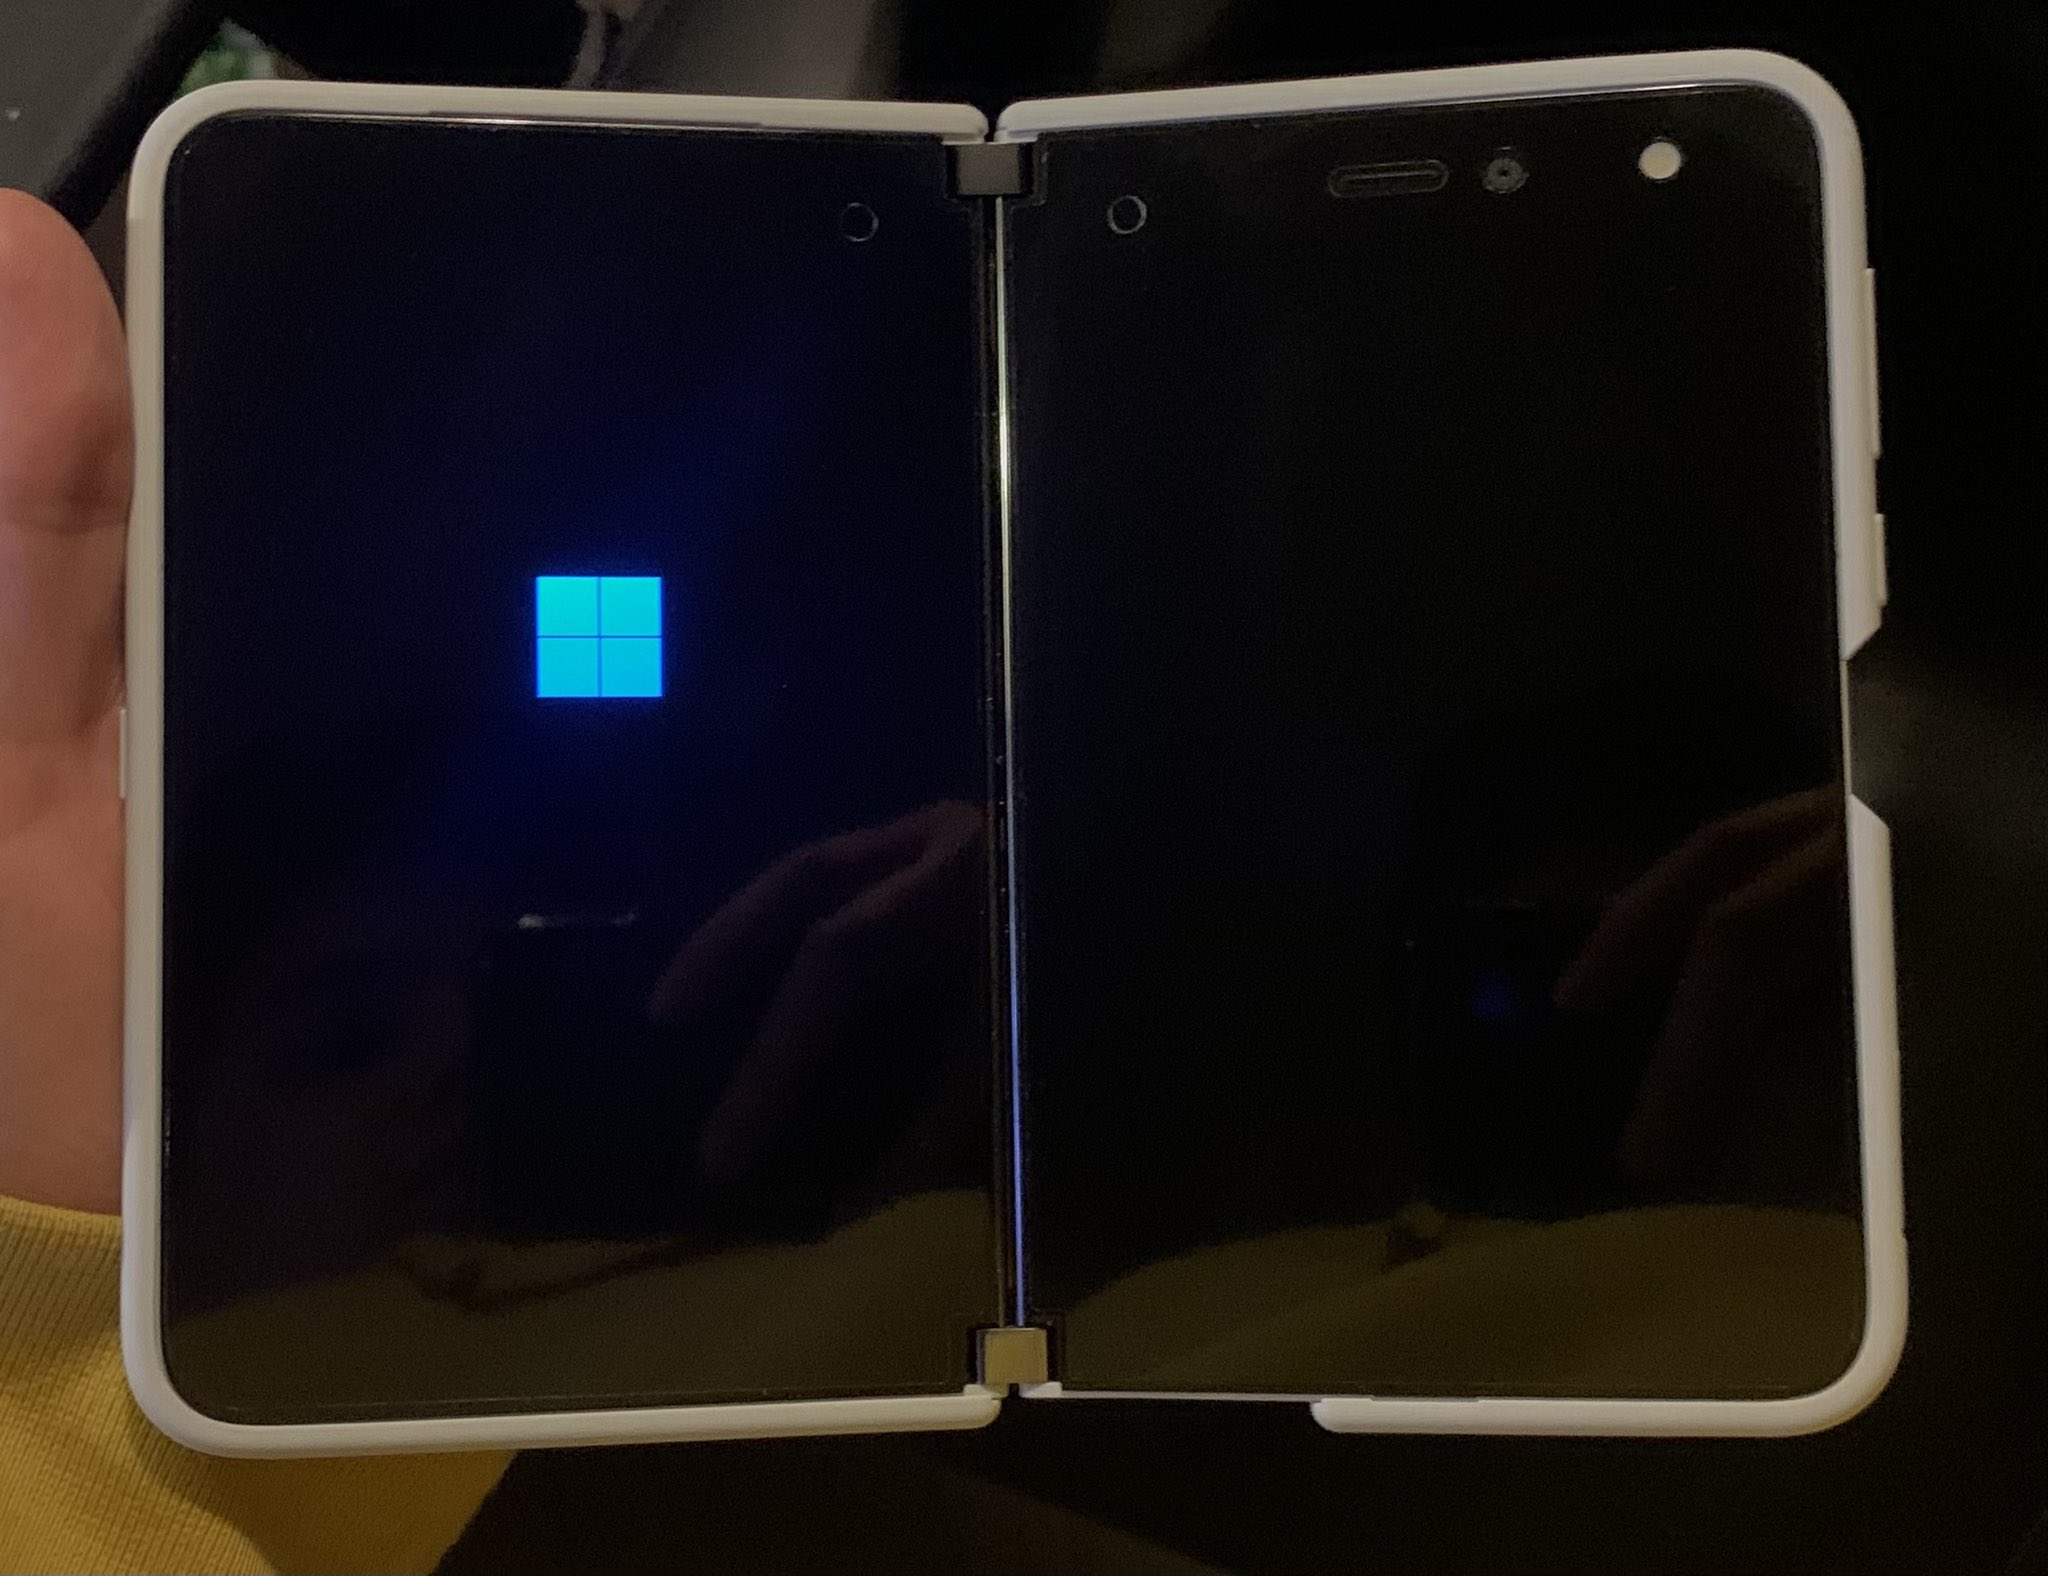 Surface Duo con Windows 11